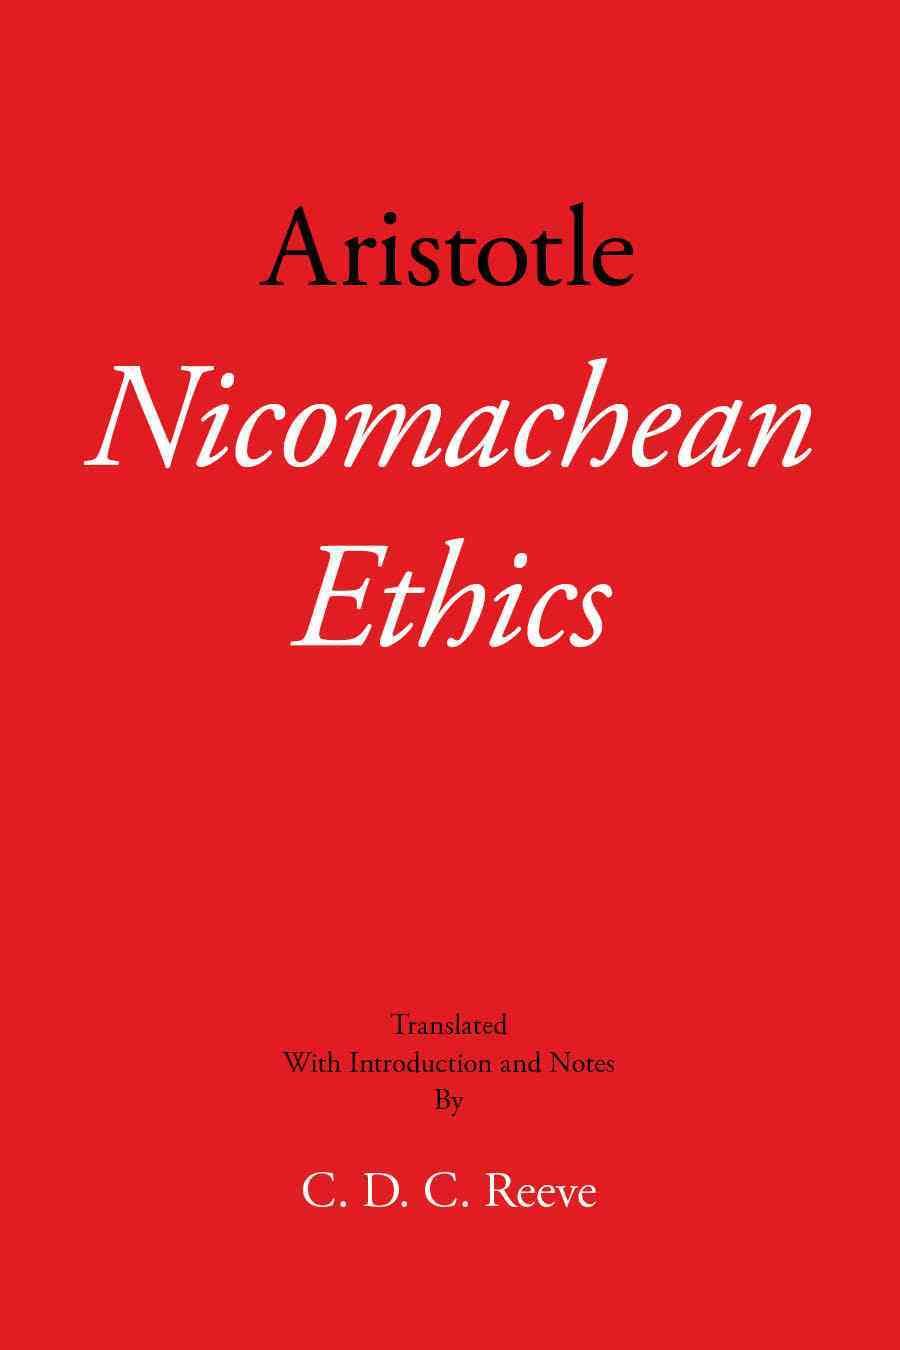 Nicomachean Ethics ร้านหนังสือและสิ่งของ เป็นร้านหนังสือภาษาอังกฤษหายาก และร้านกาแฟ หรือ บุ๊คคาเฟ่ ตั้งอยู่สุขุมวิท กรุงเทพ